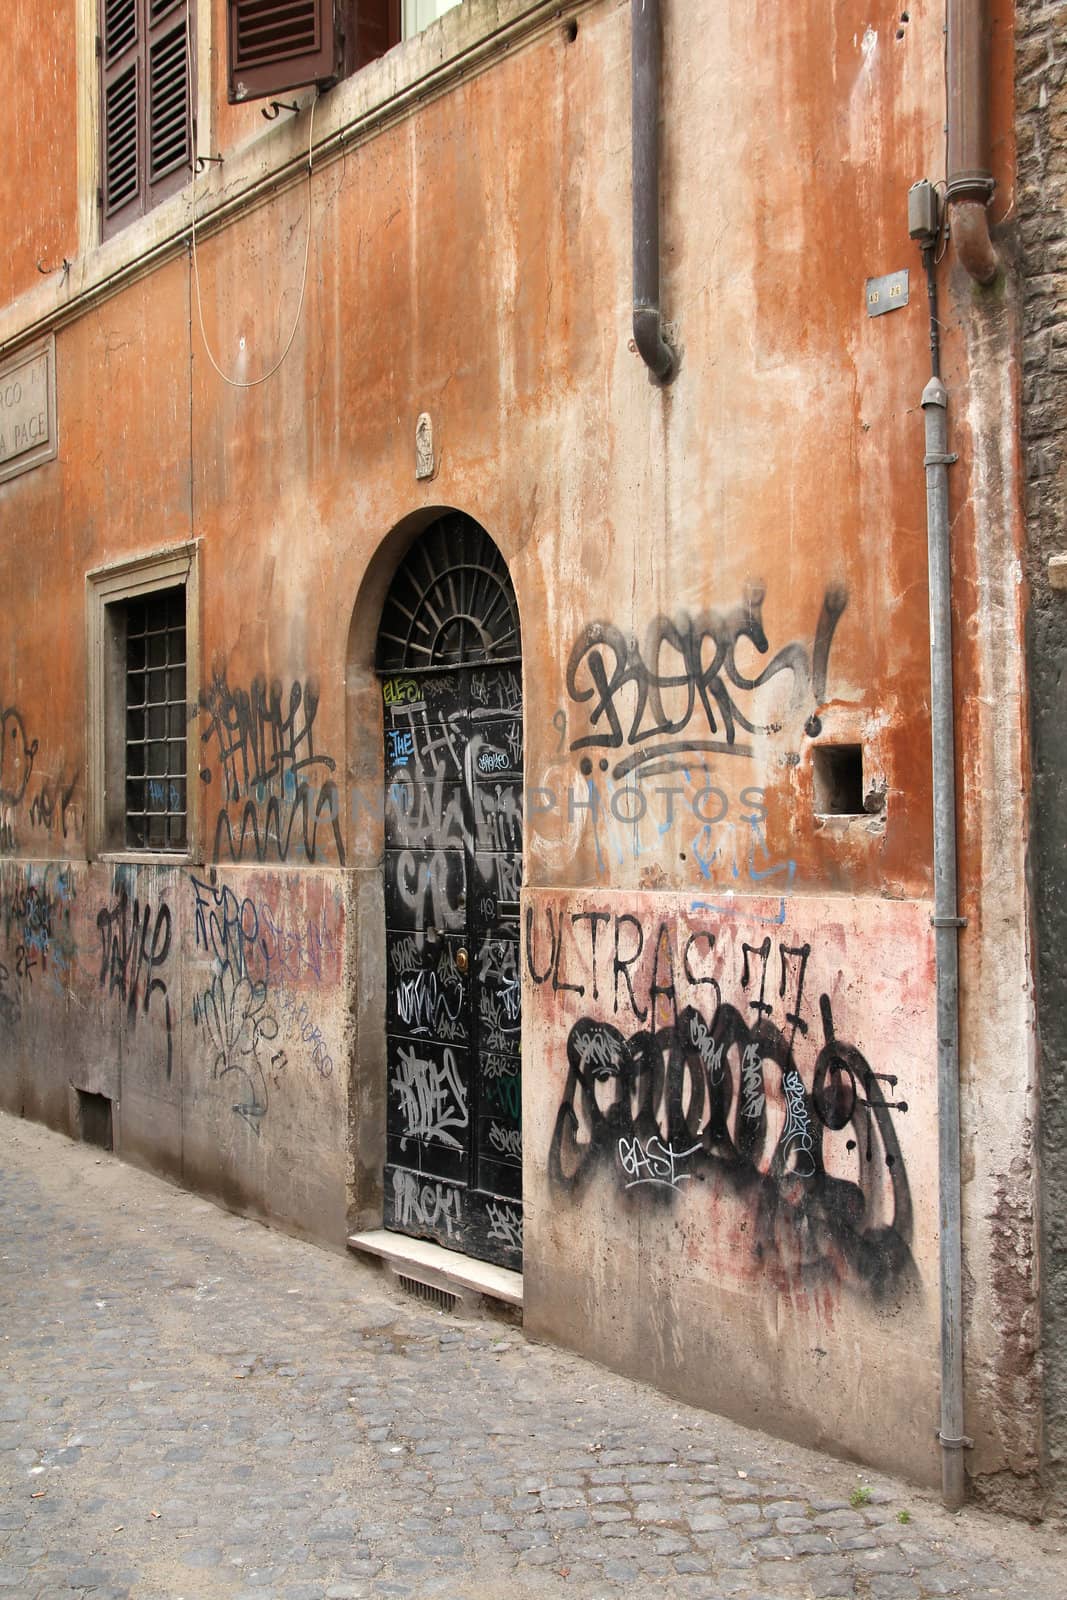 Rome, Italy. Street view of graffiti vandalism.